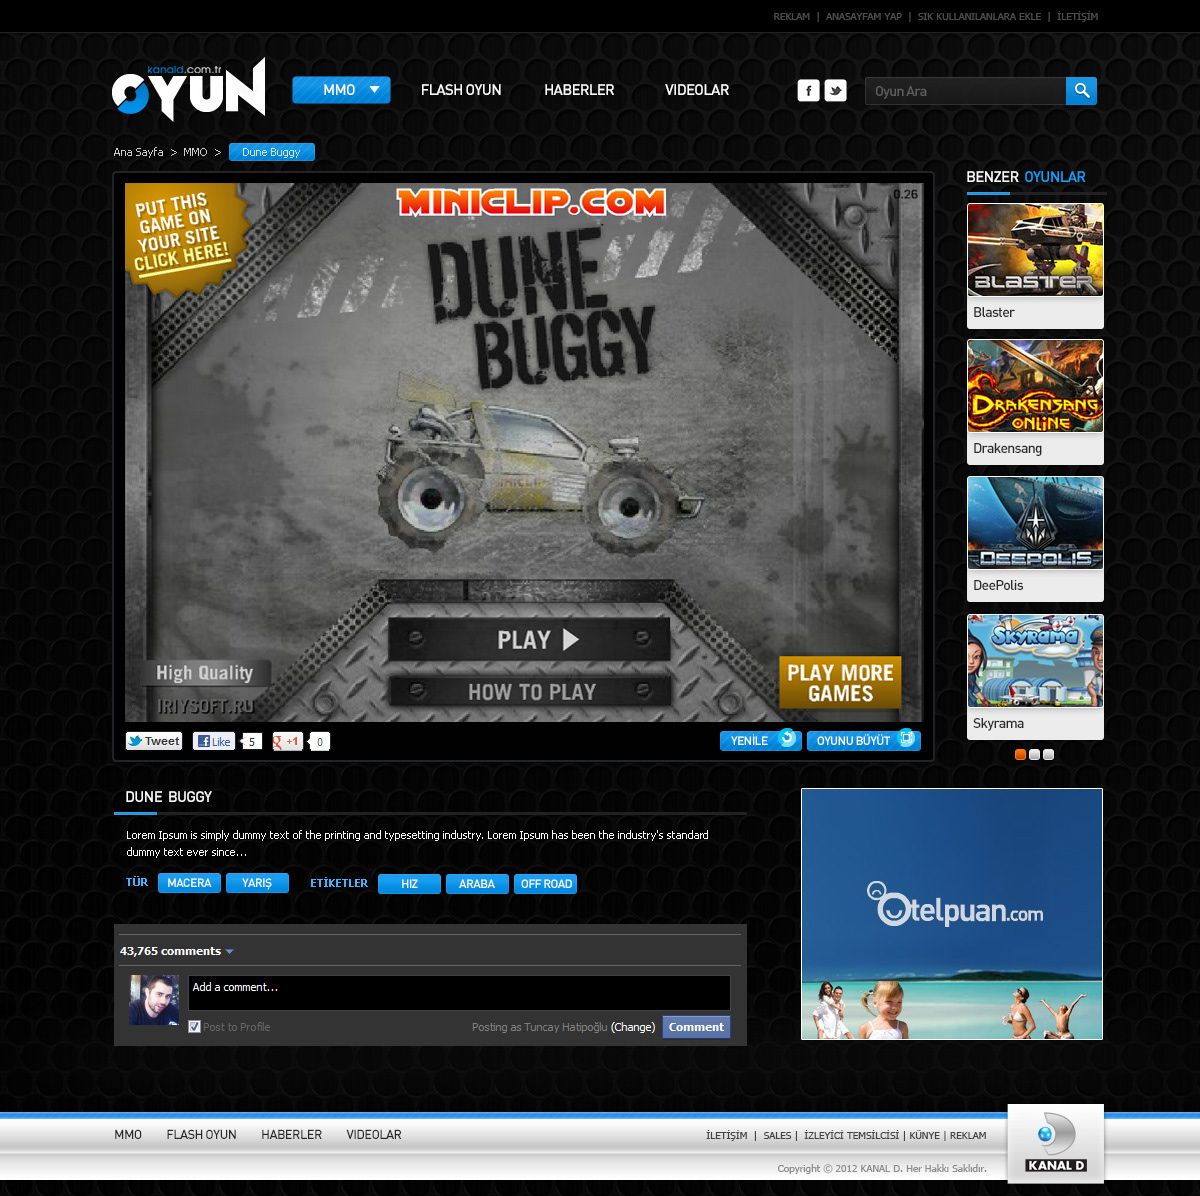 game game portal kanald kanald oyun game website Website Flash Game game news Oyun mmo